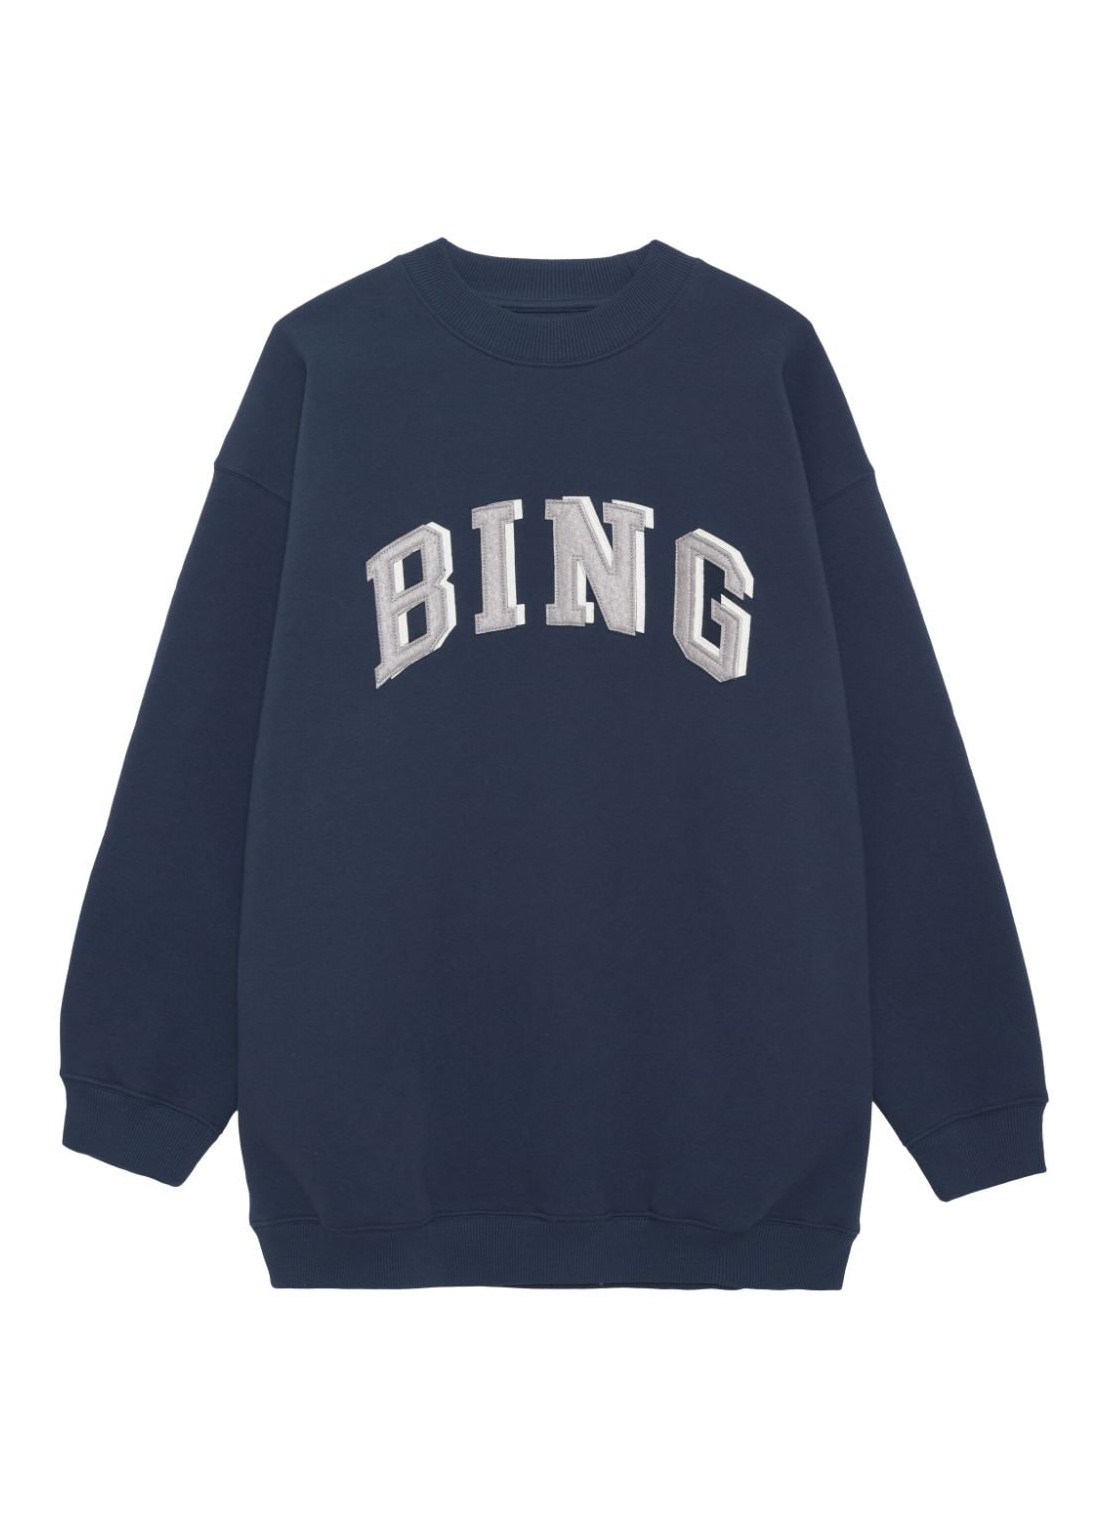 Sudadera anine bing sweater woman tyler sweatshirt bing a085205420 navy talla L
 